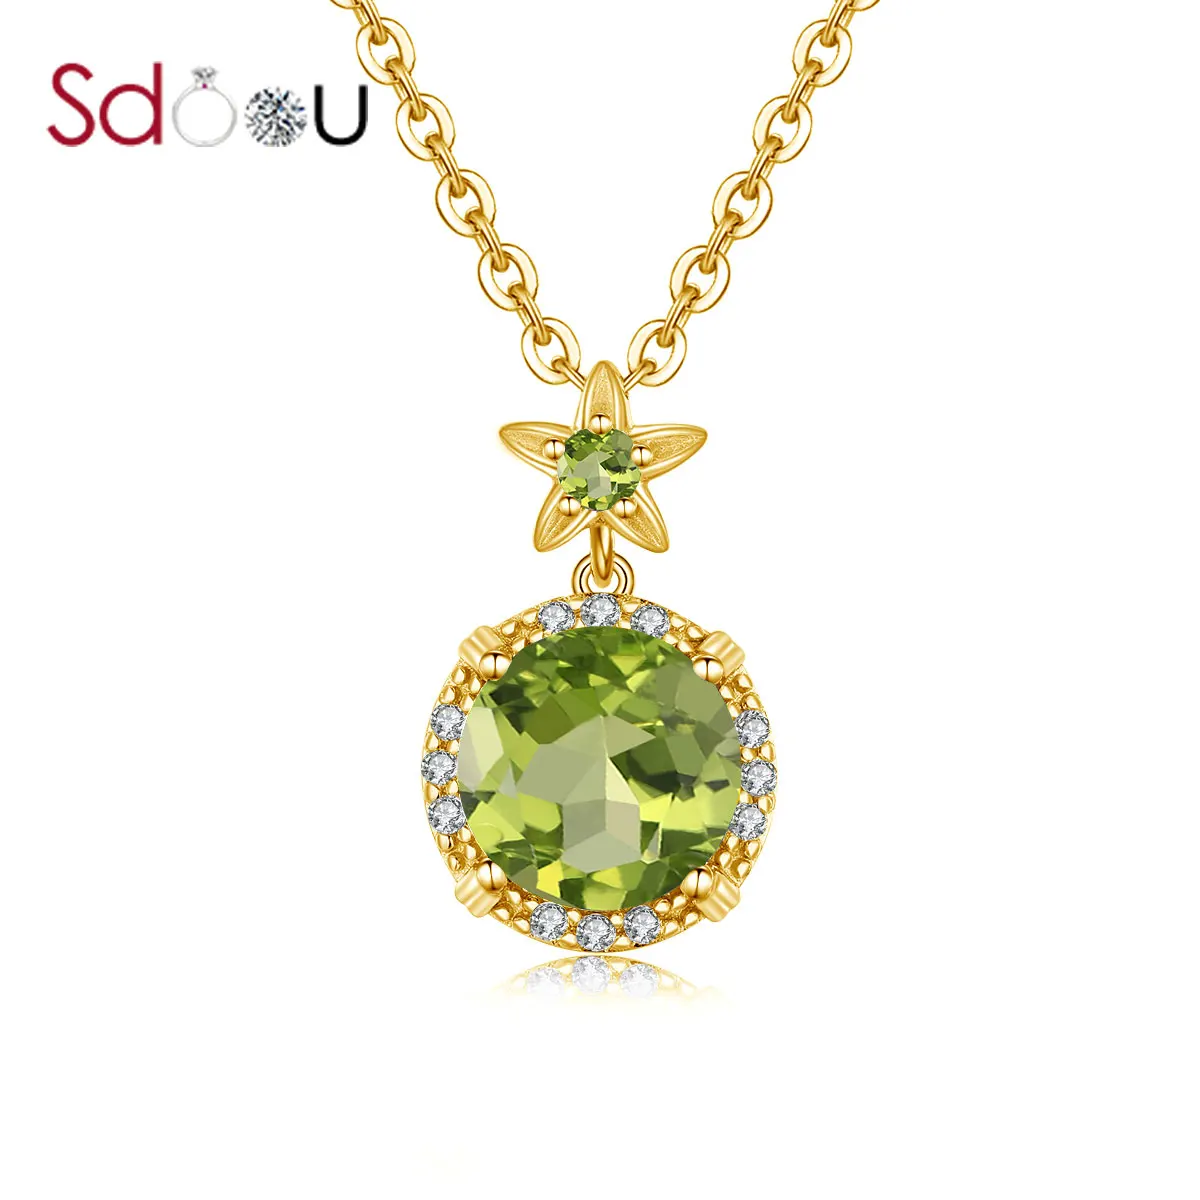 

SDOOU Women Silver 925 Pendant Flower Round Gemstone Green Peridot 14K Gold Necklace Pendant Korean Fashion Fine Jewelry Gift